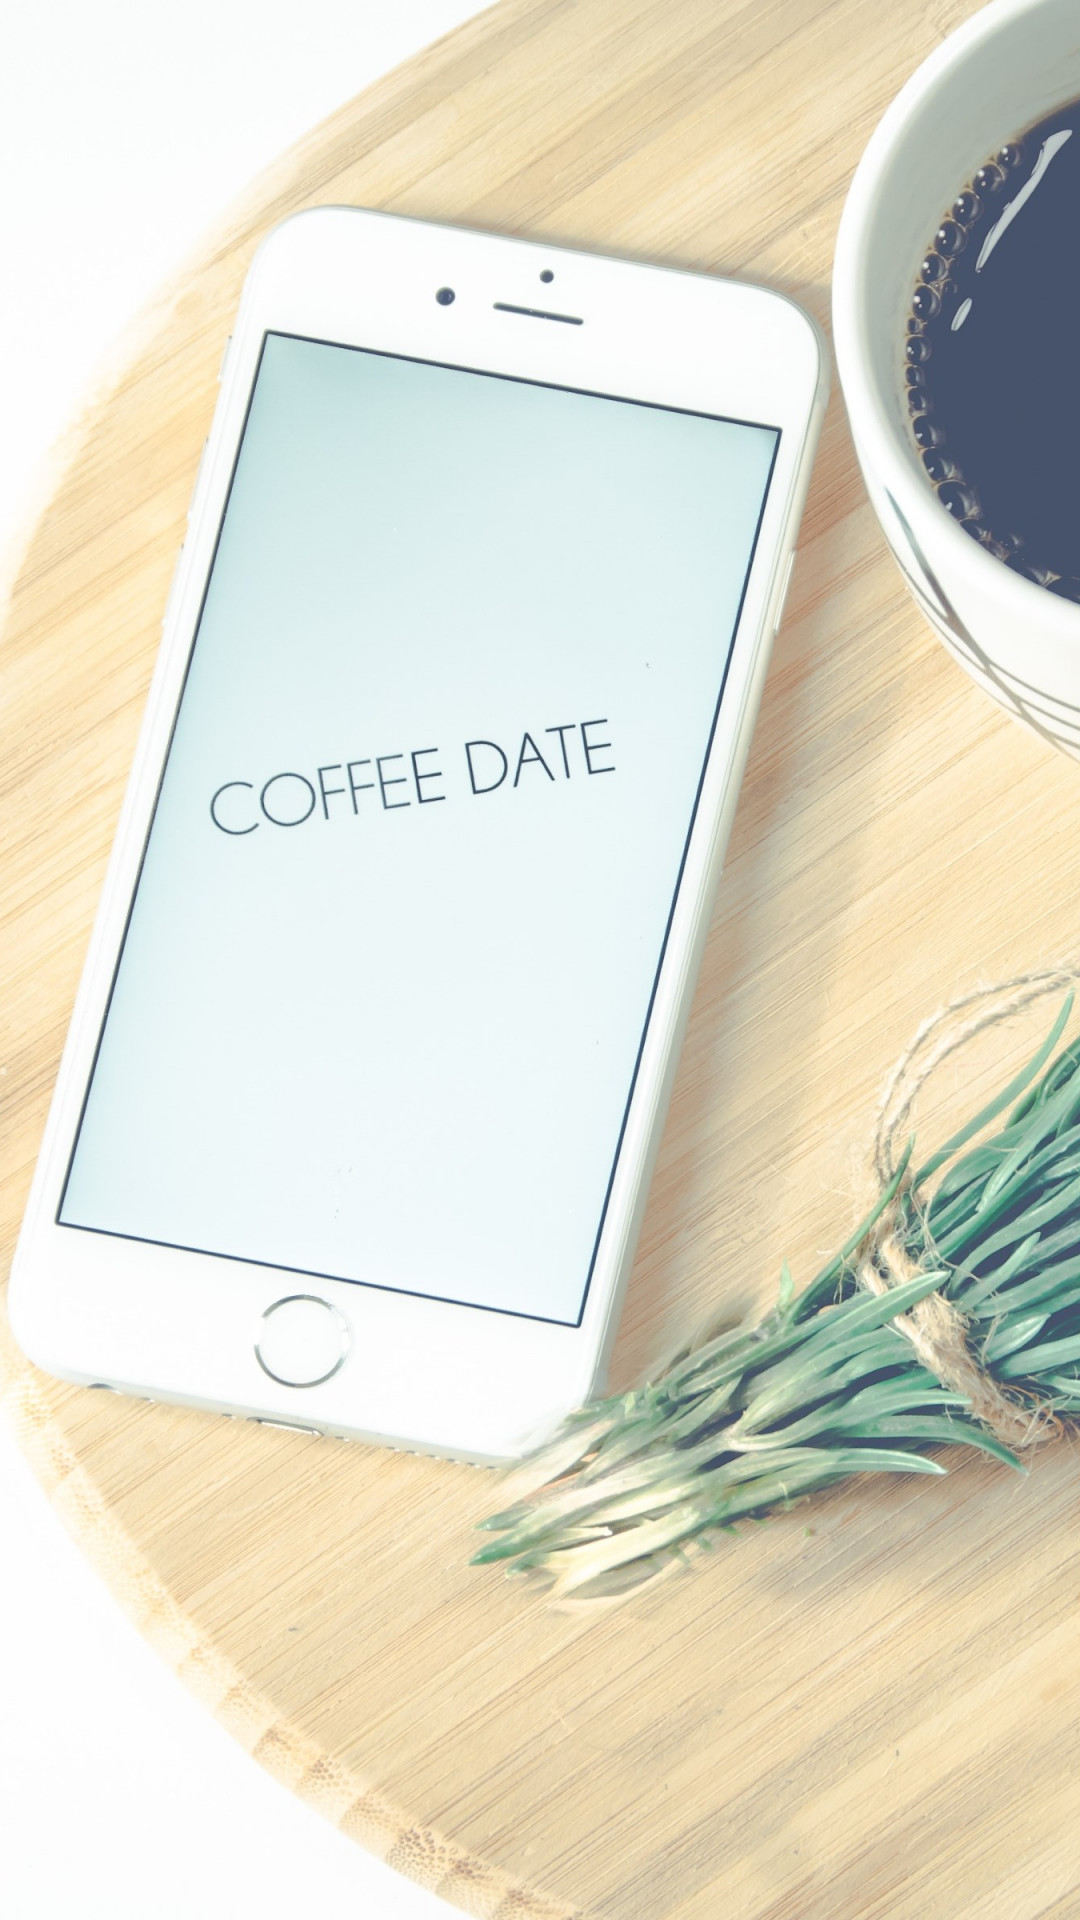 Coffee date wallpaper 1080x1920